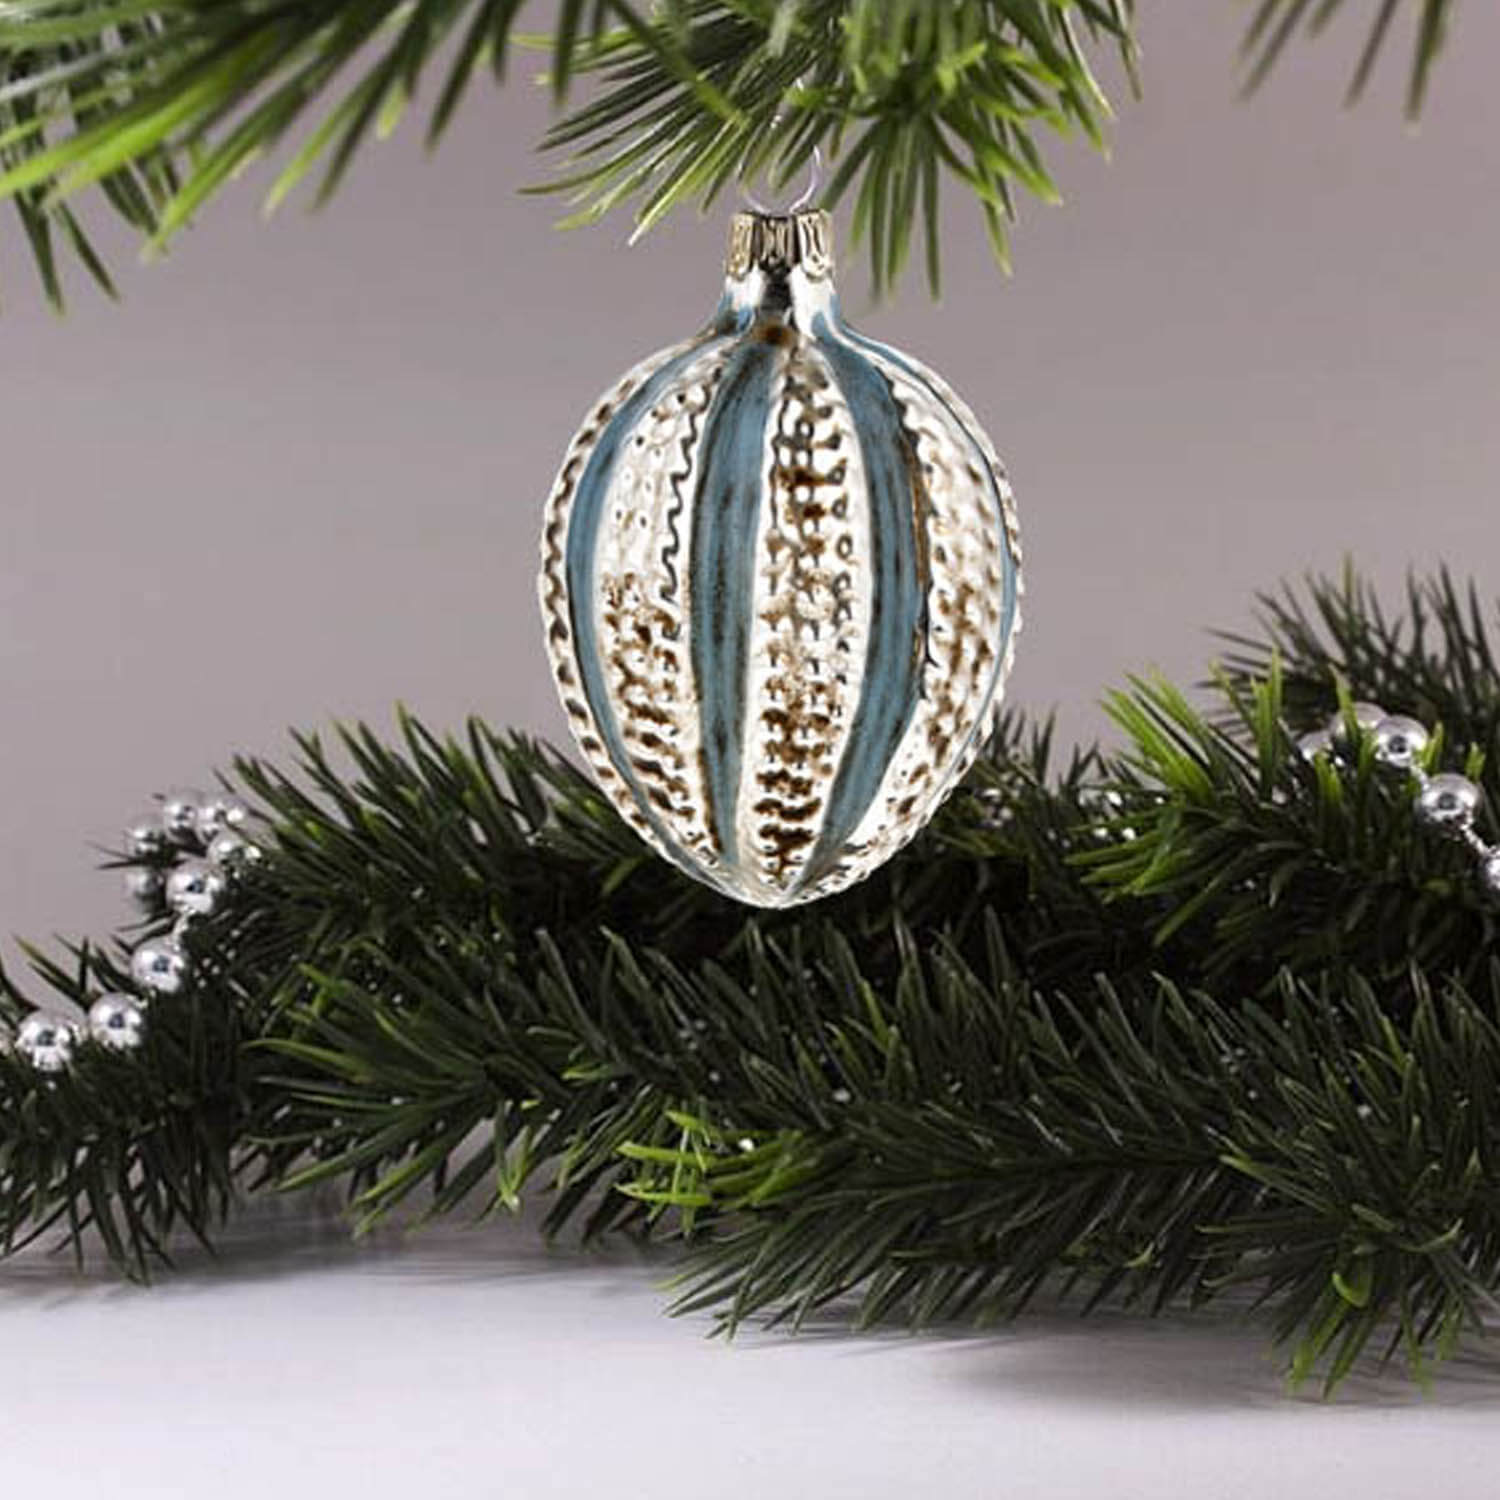 MAROLIN® - Miniature glass ornament "Egg with knobs blue"